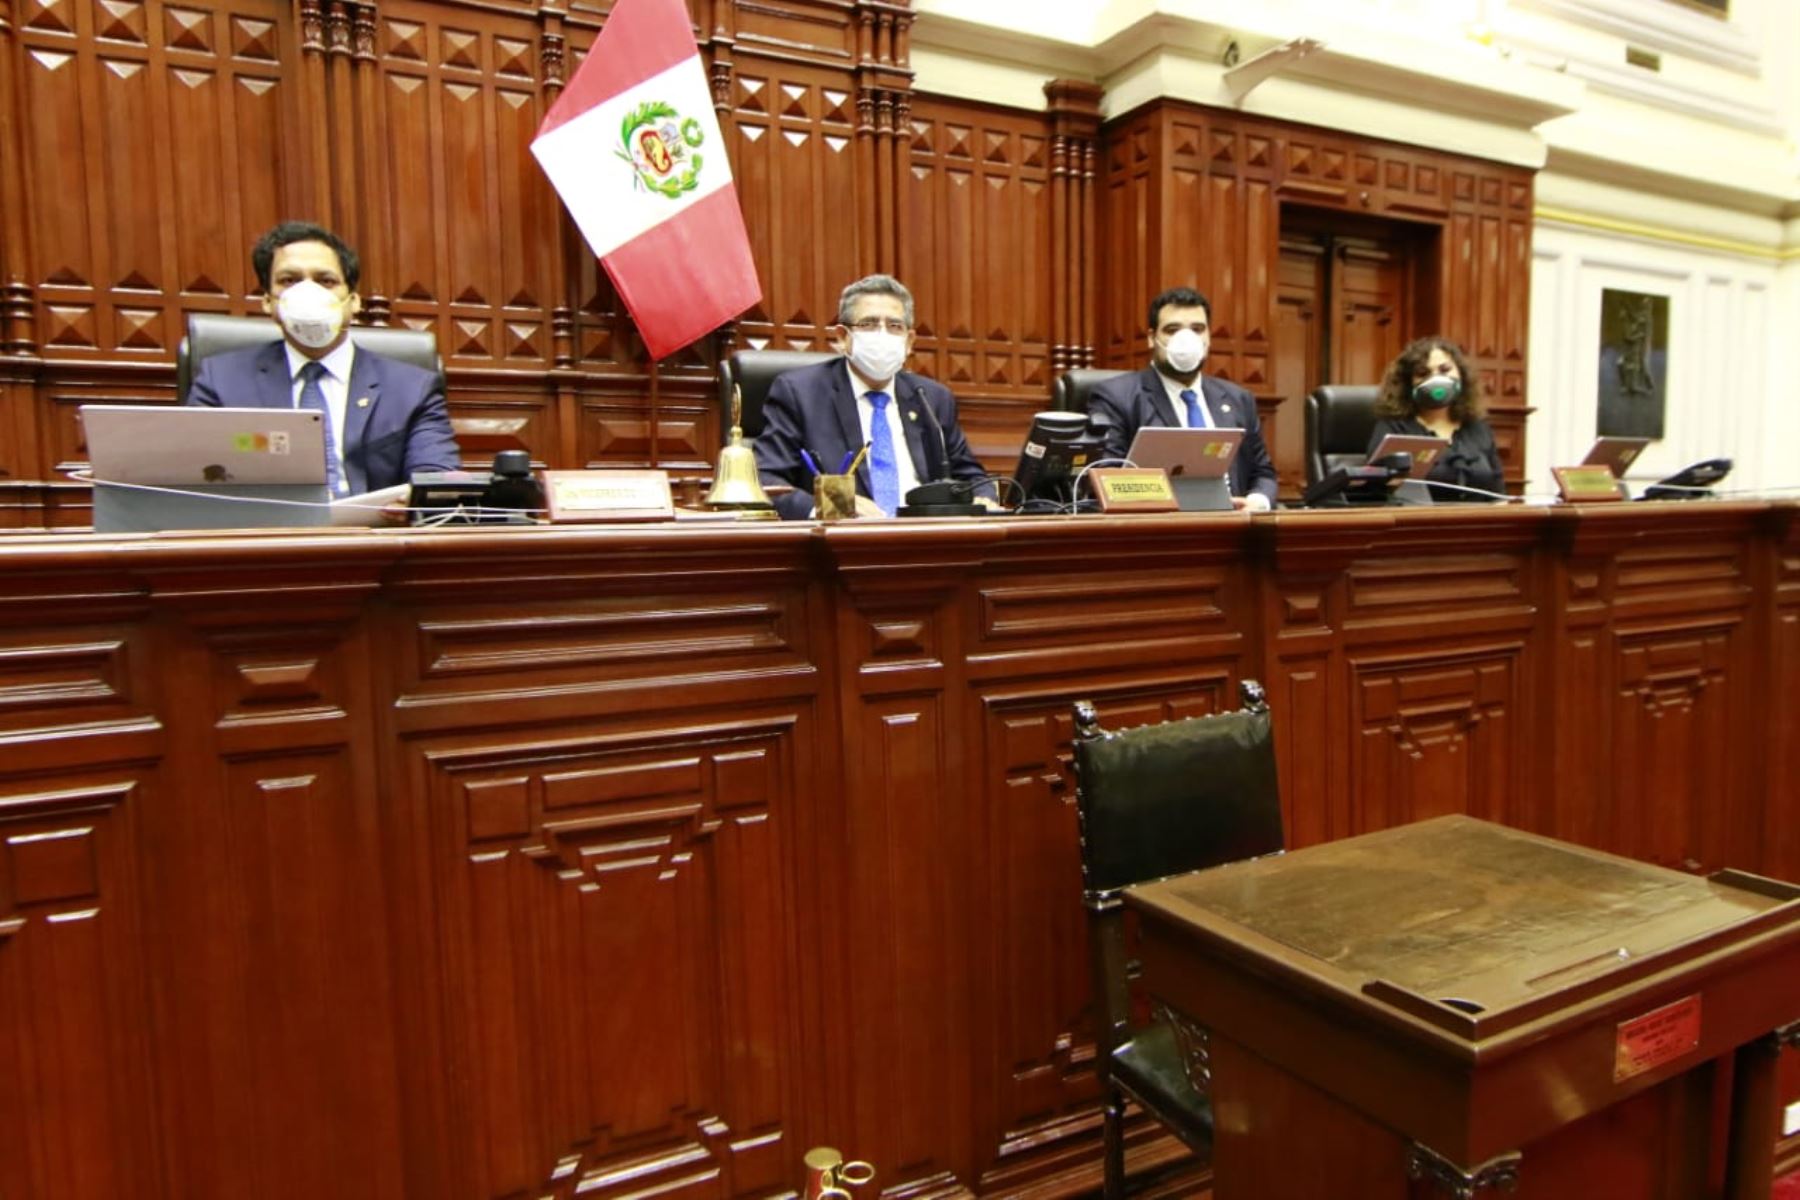 Comisión Permanente del Congreso dio un plazo de 15 días para que se emita un informe final respecto a la denuncia constitucional contra Boluarte. Foto: Andina